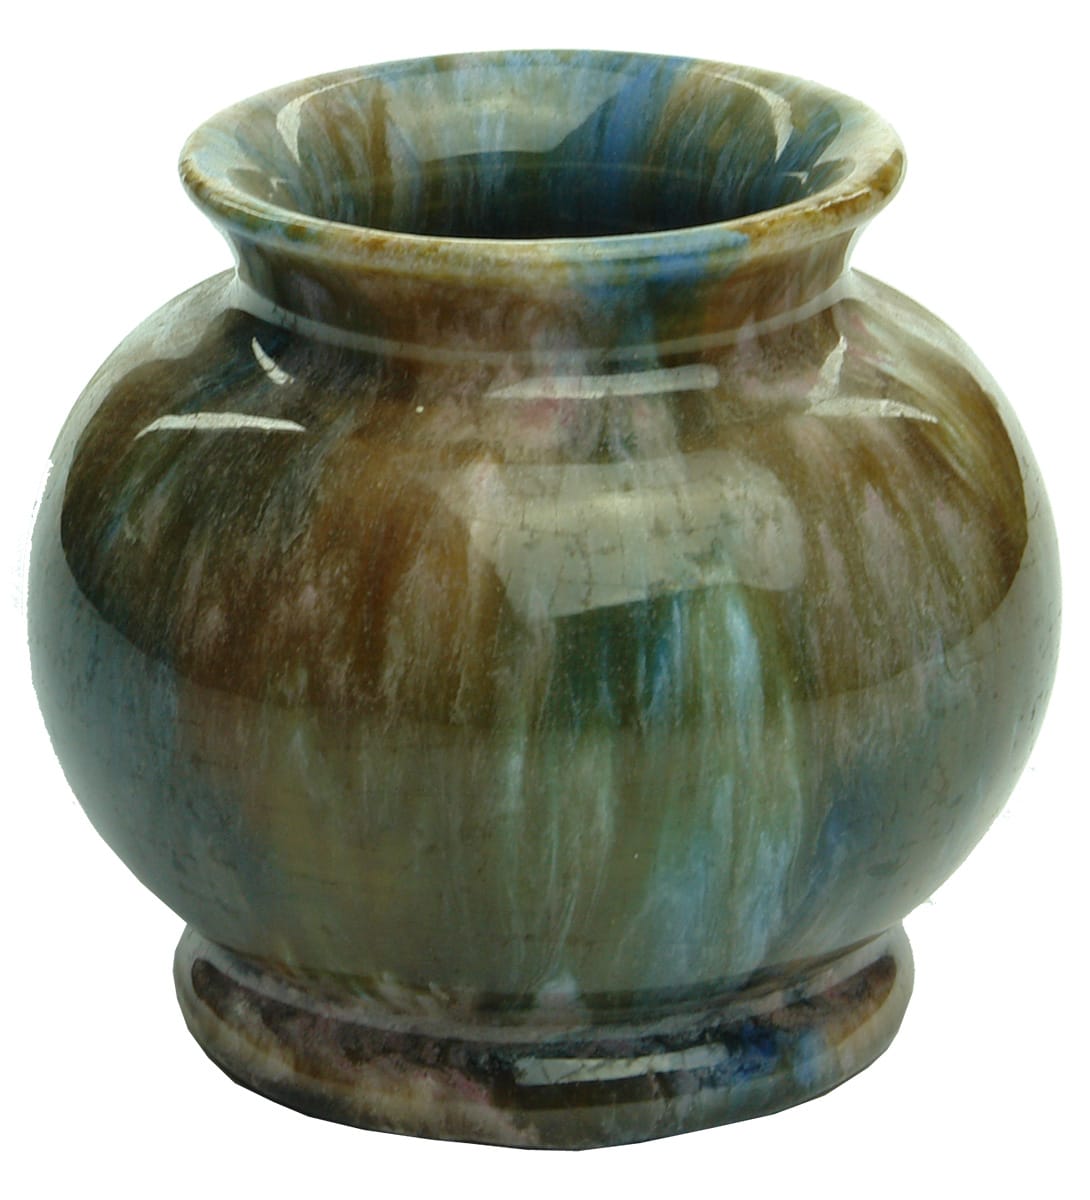 Regal Mashman Pottery Vase